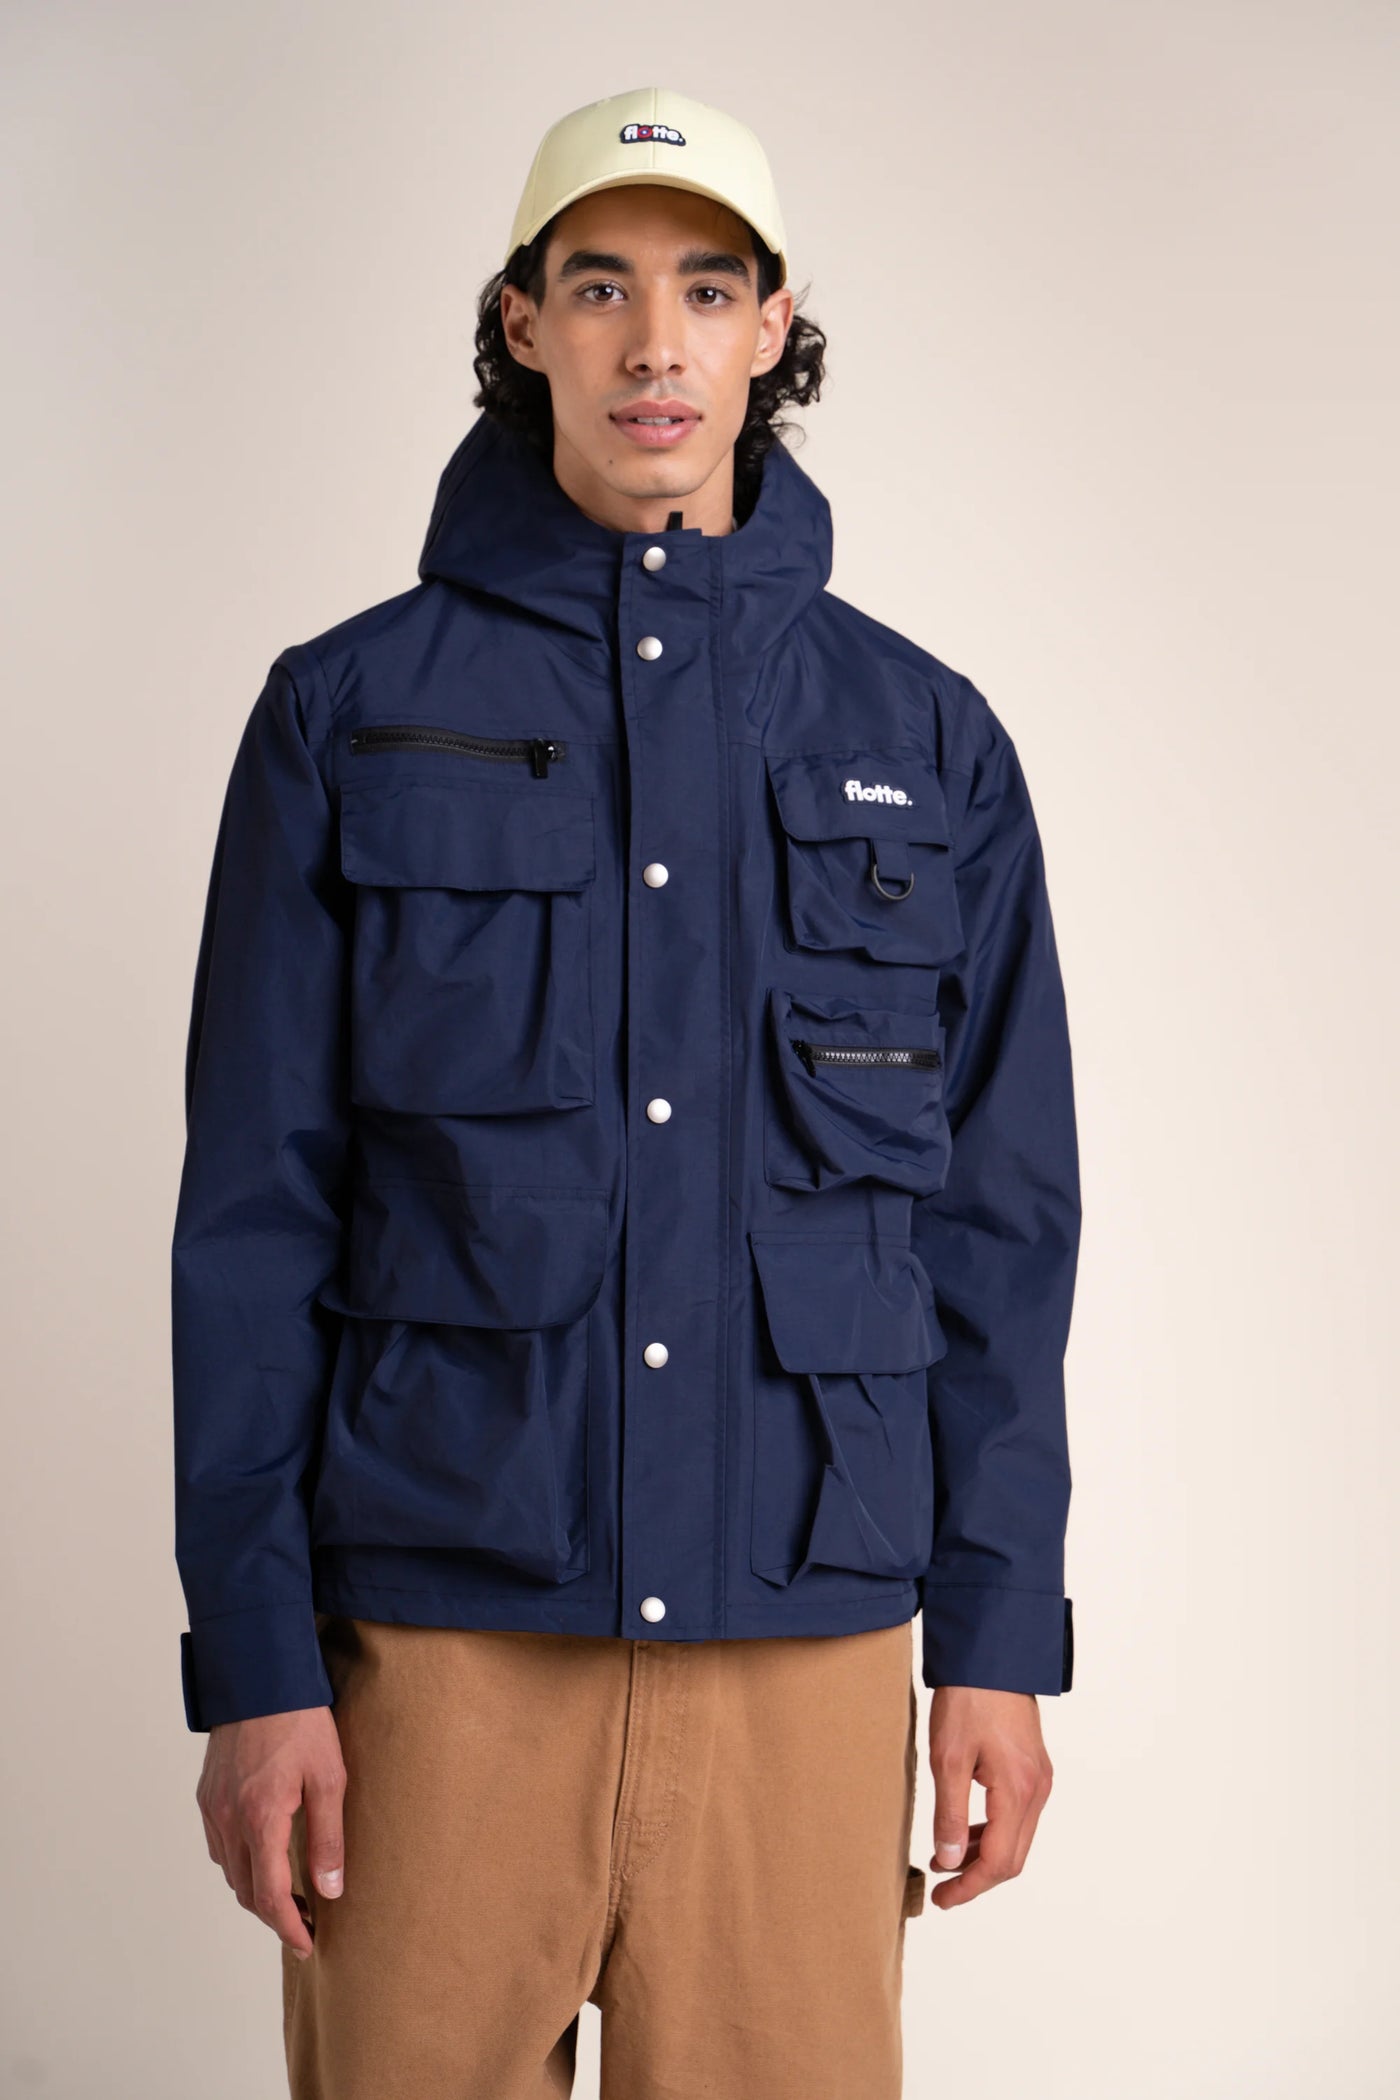 Saint Cyr - multipocket jacket - Flotte #couleur_indigo